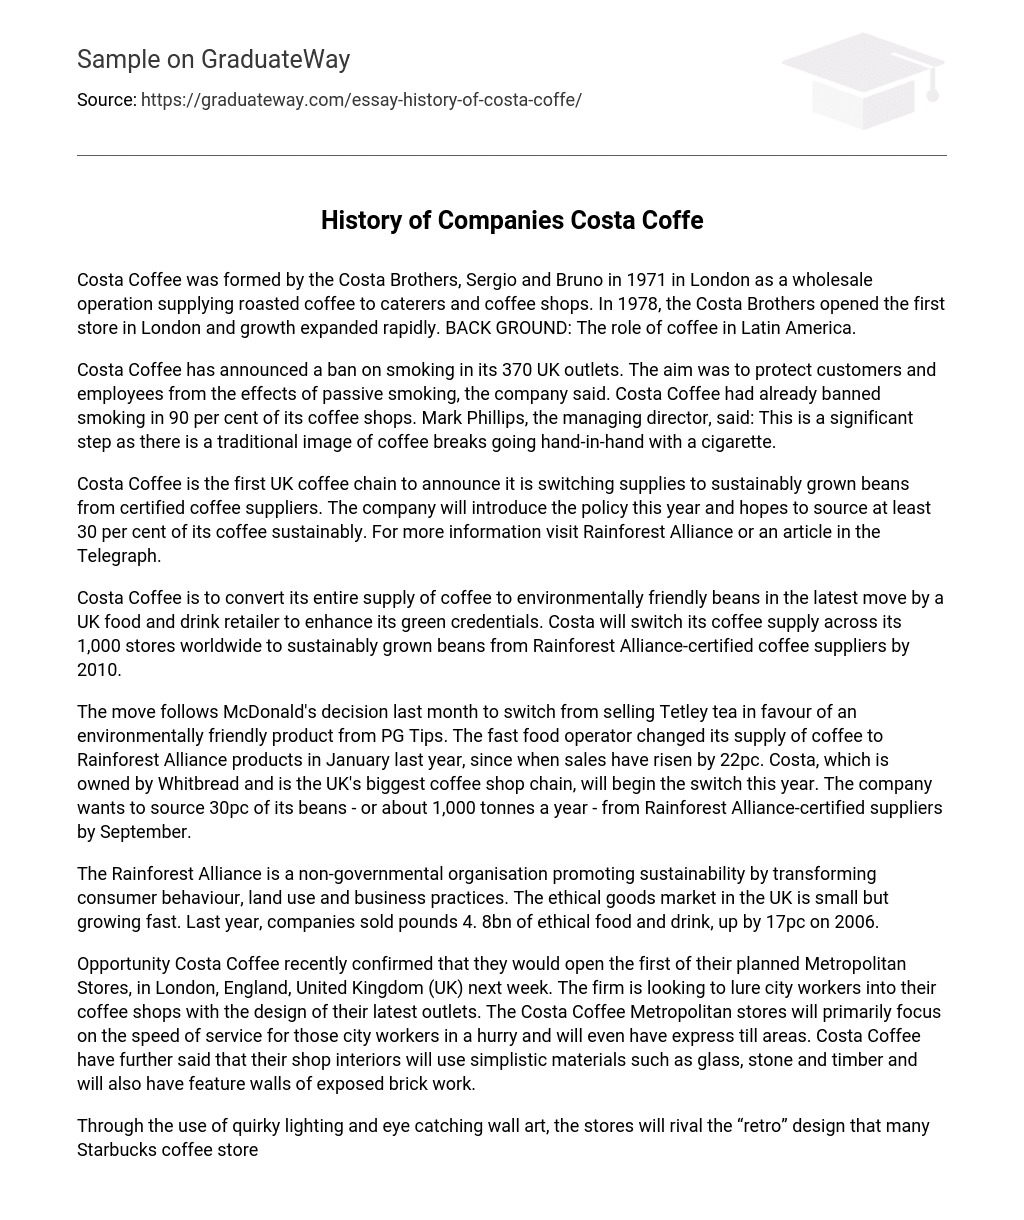 History of Companies Costa Coffe